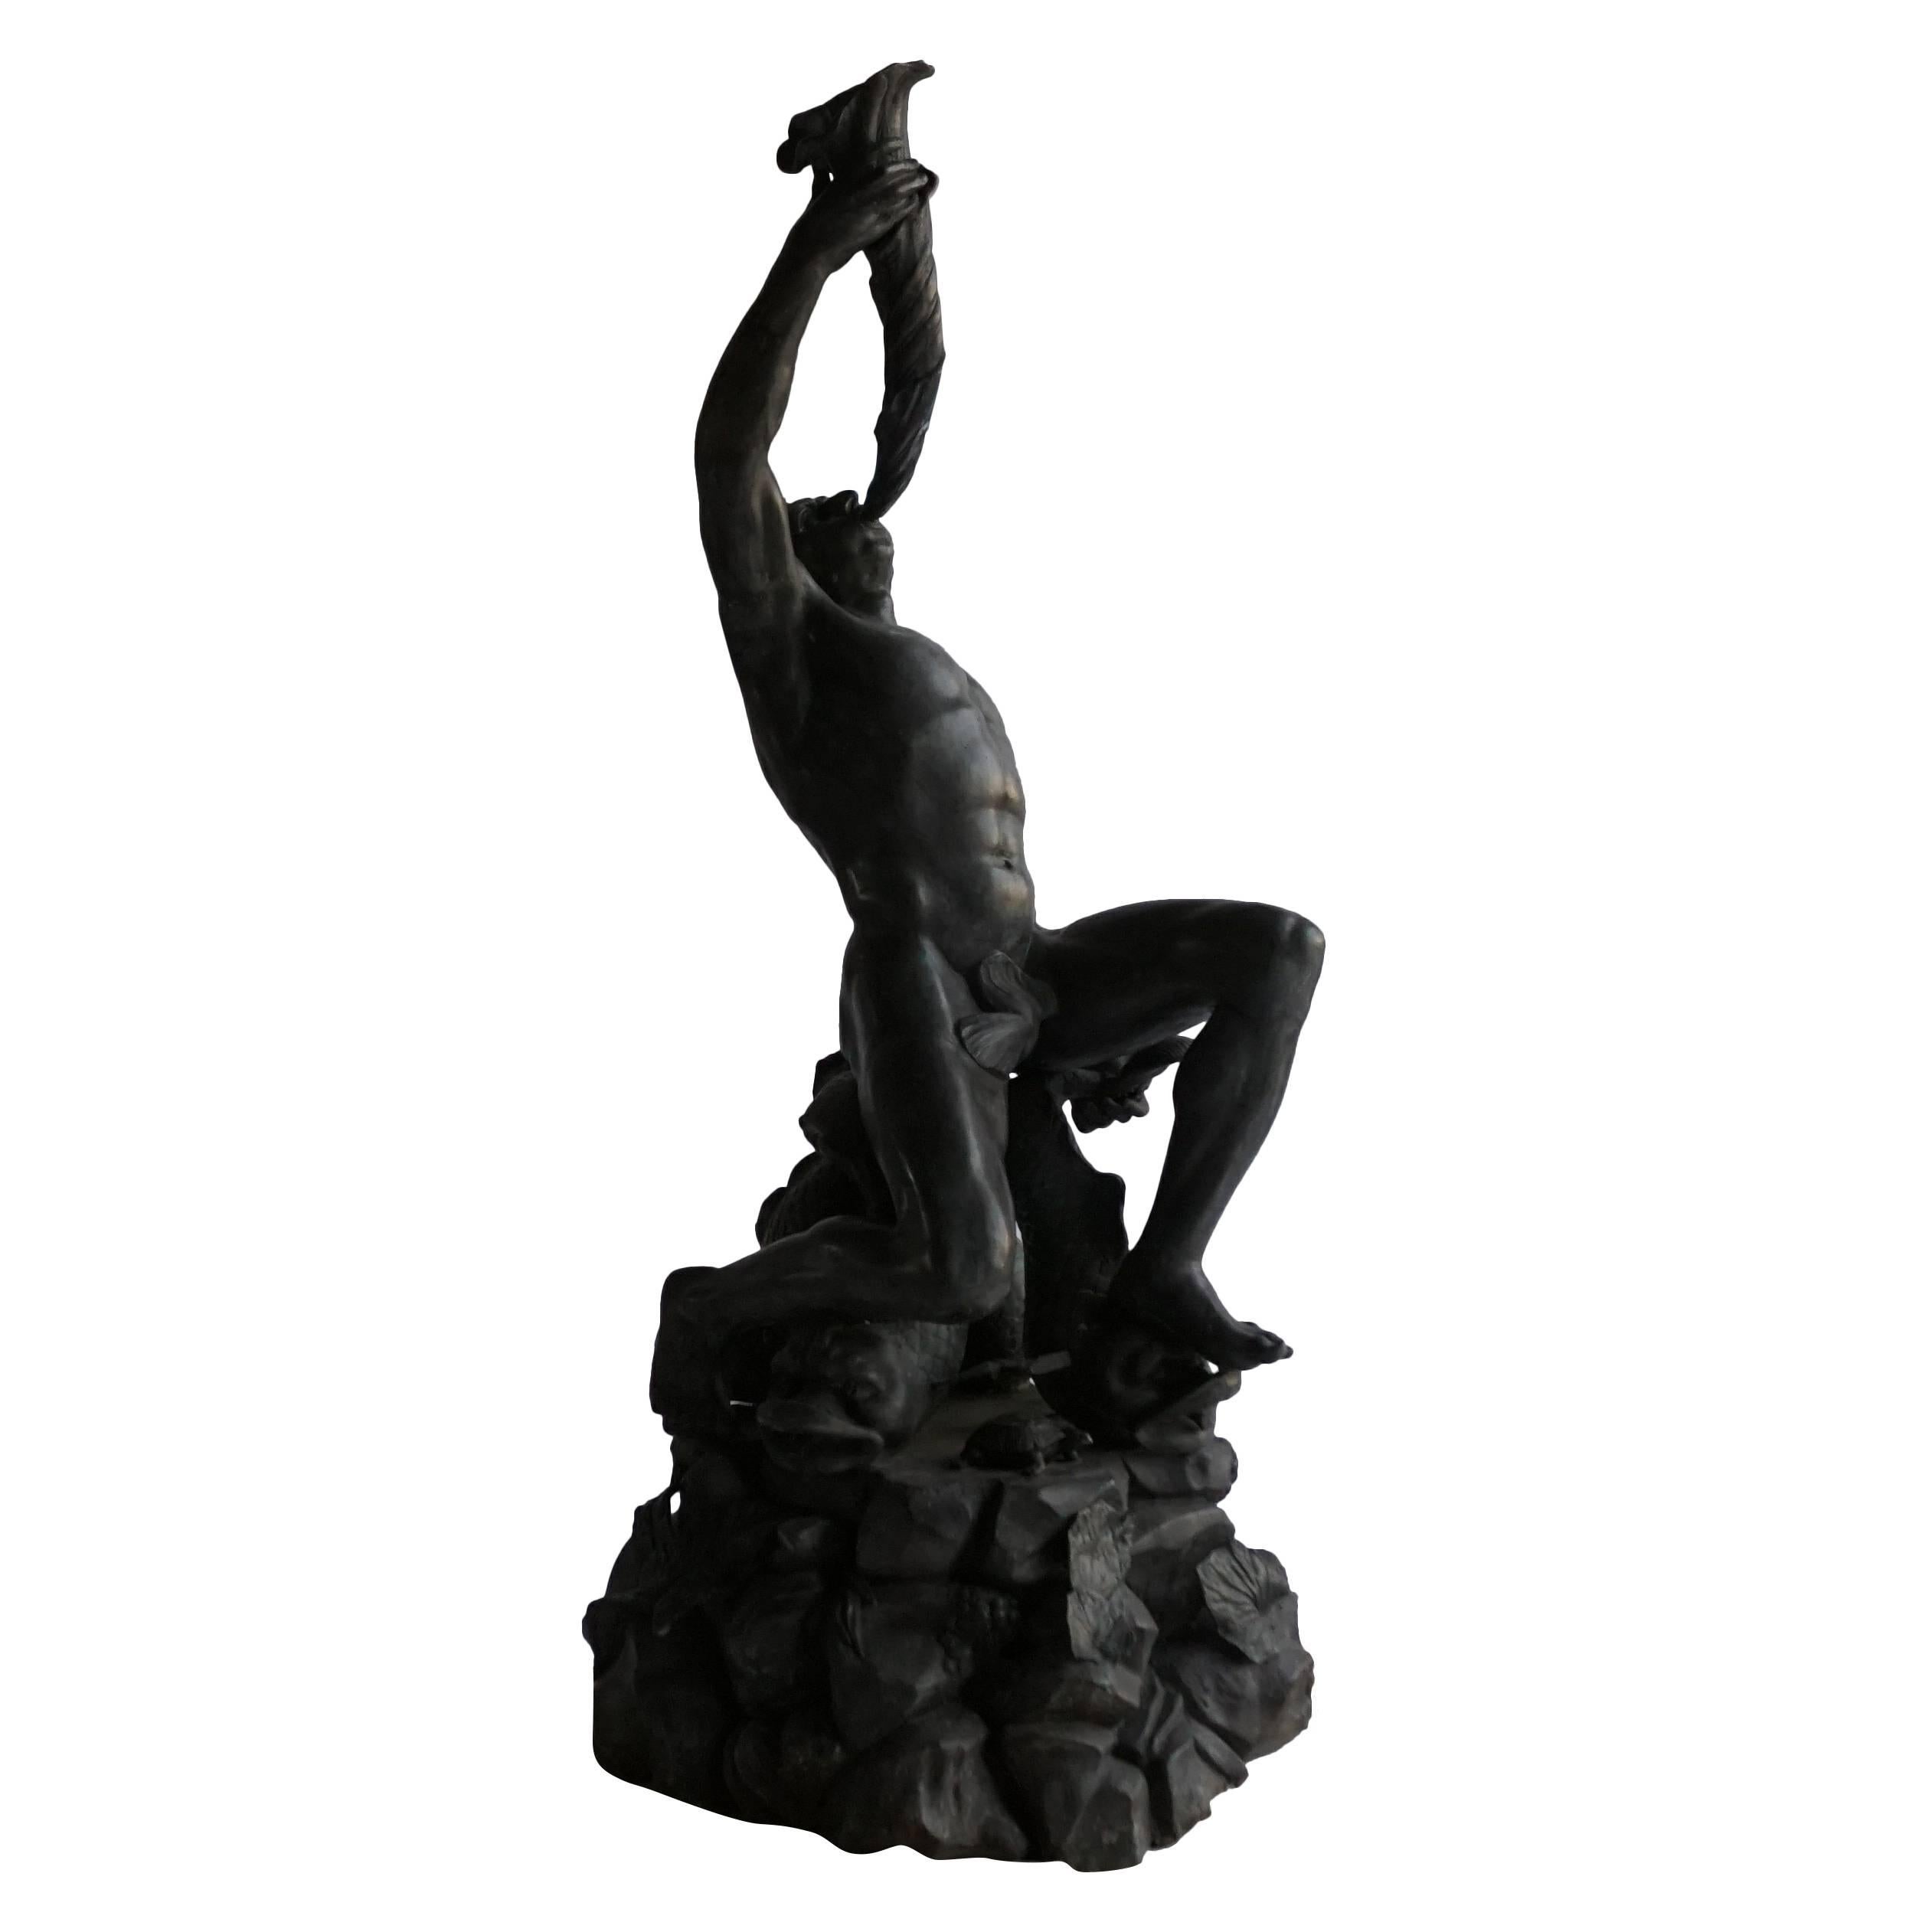 French Mid-19th Century Triton Sculpture